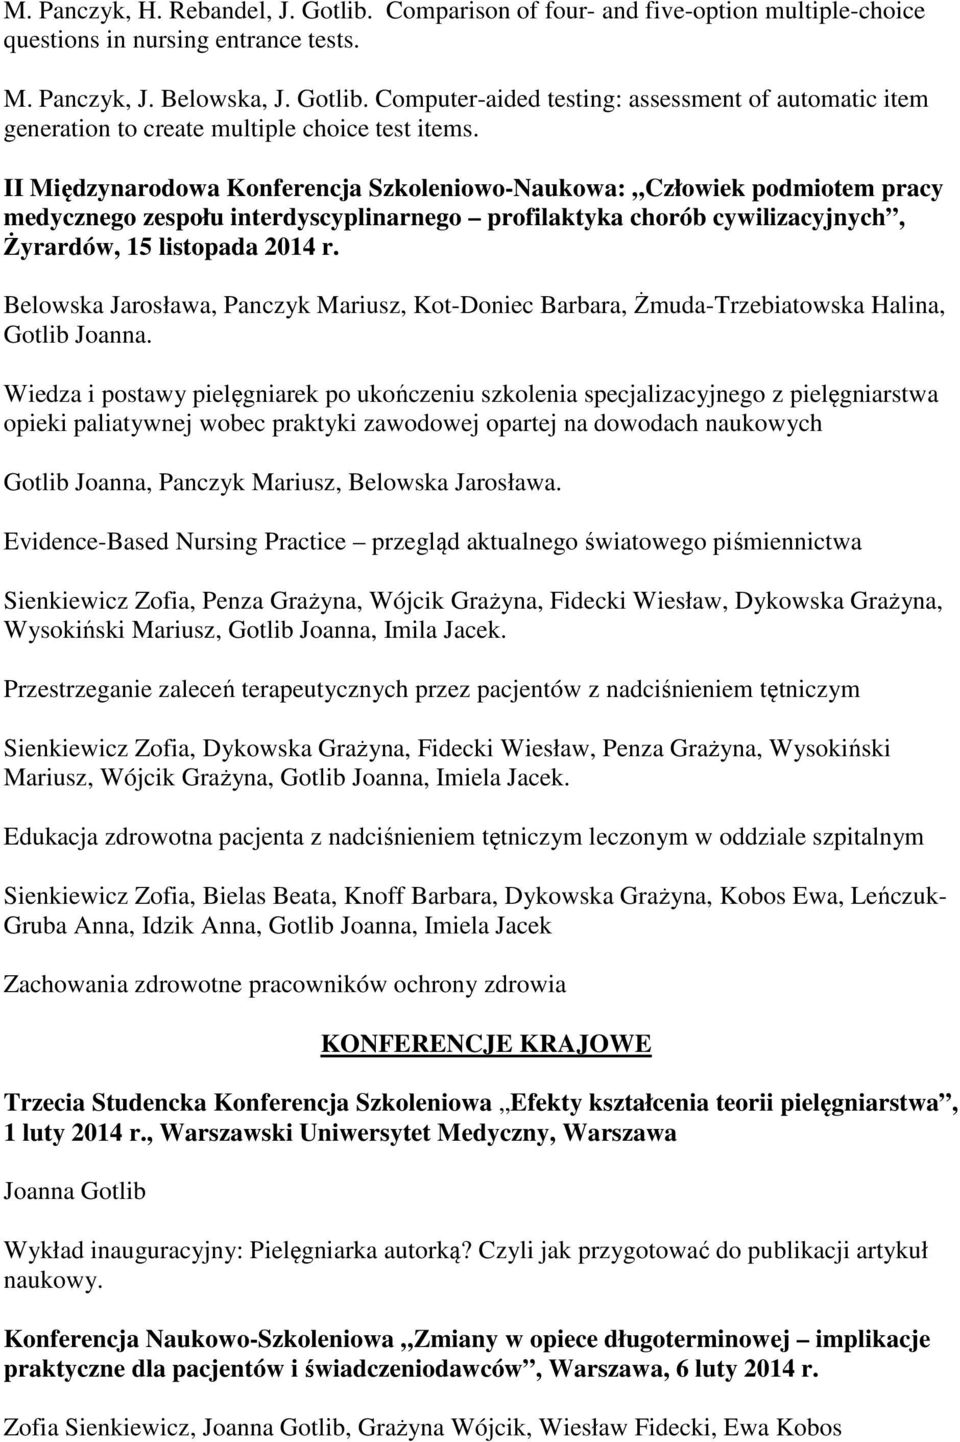 Belowska Jarosława, Panczyk Mariusz, Kot-Doniec Barbara, Żmuda-Trzebiatowska Halina, Gotlib Joanna.